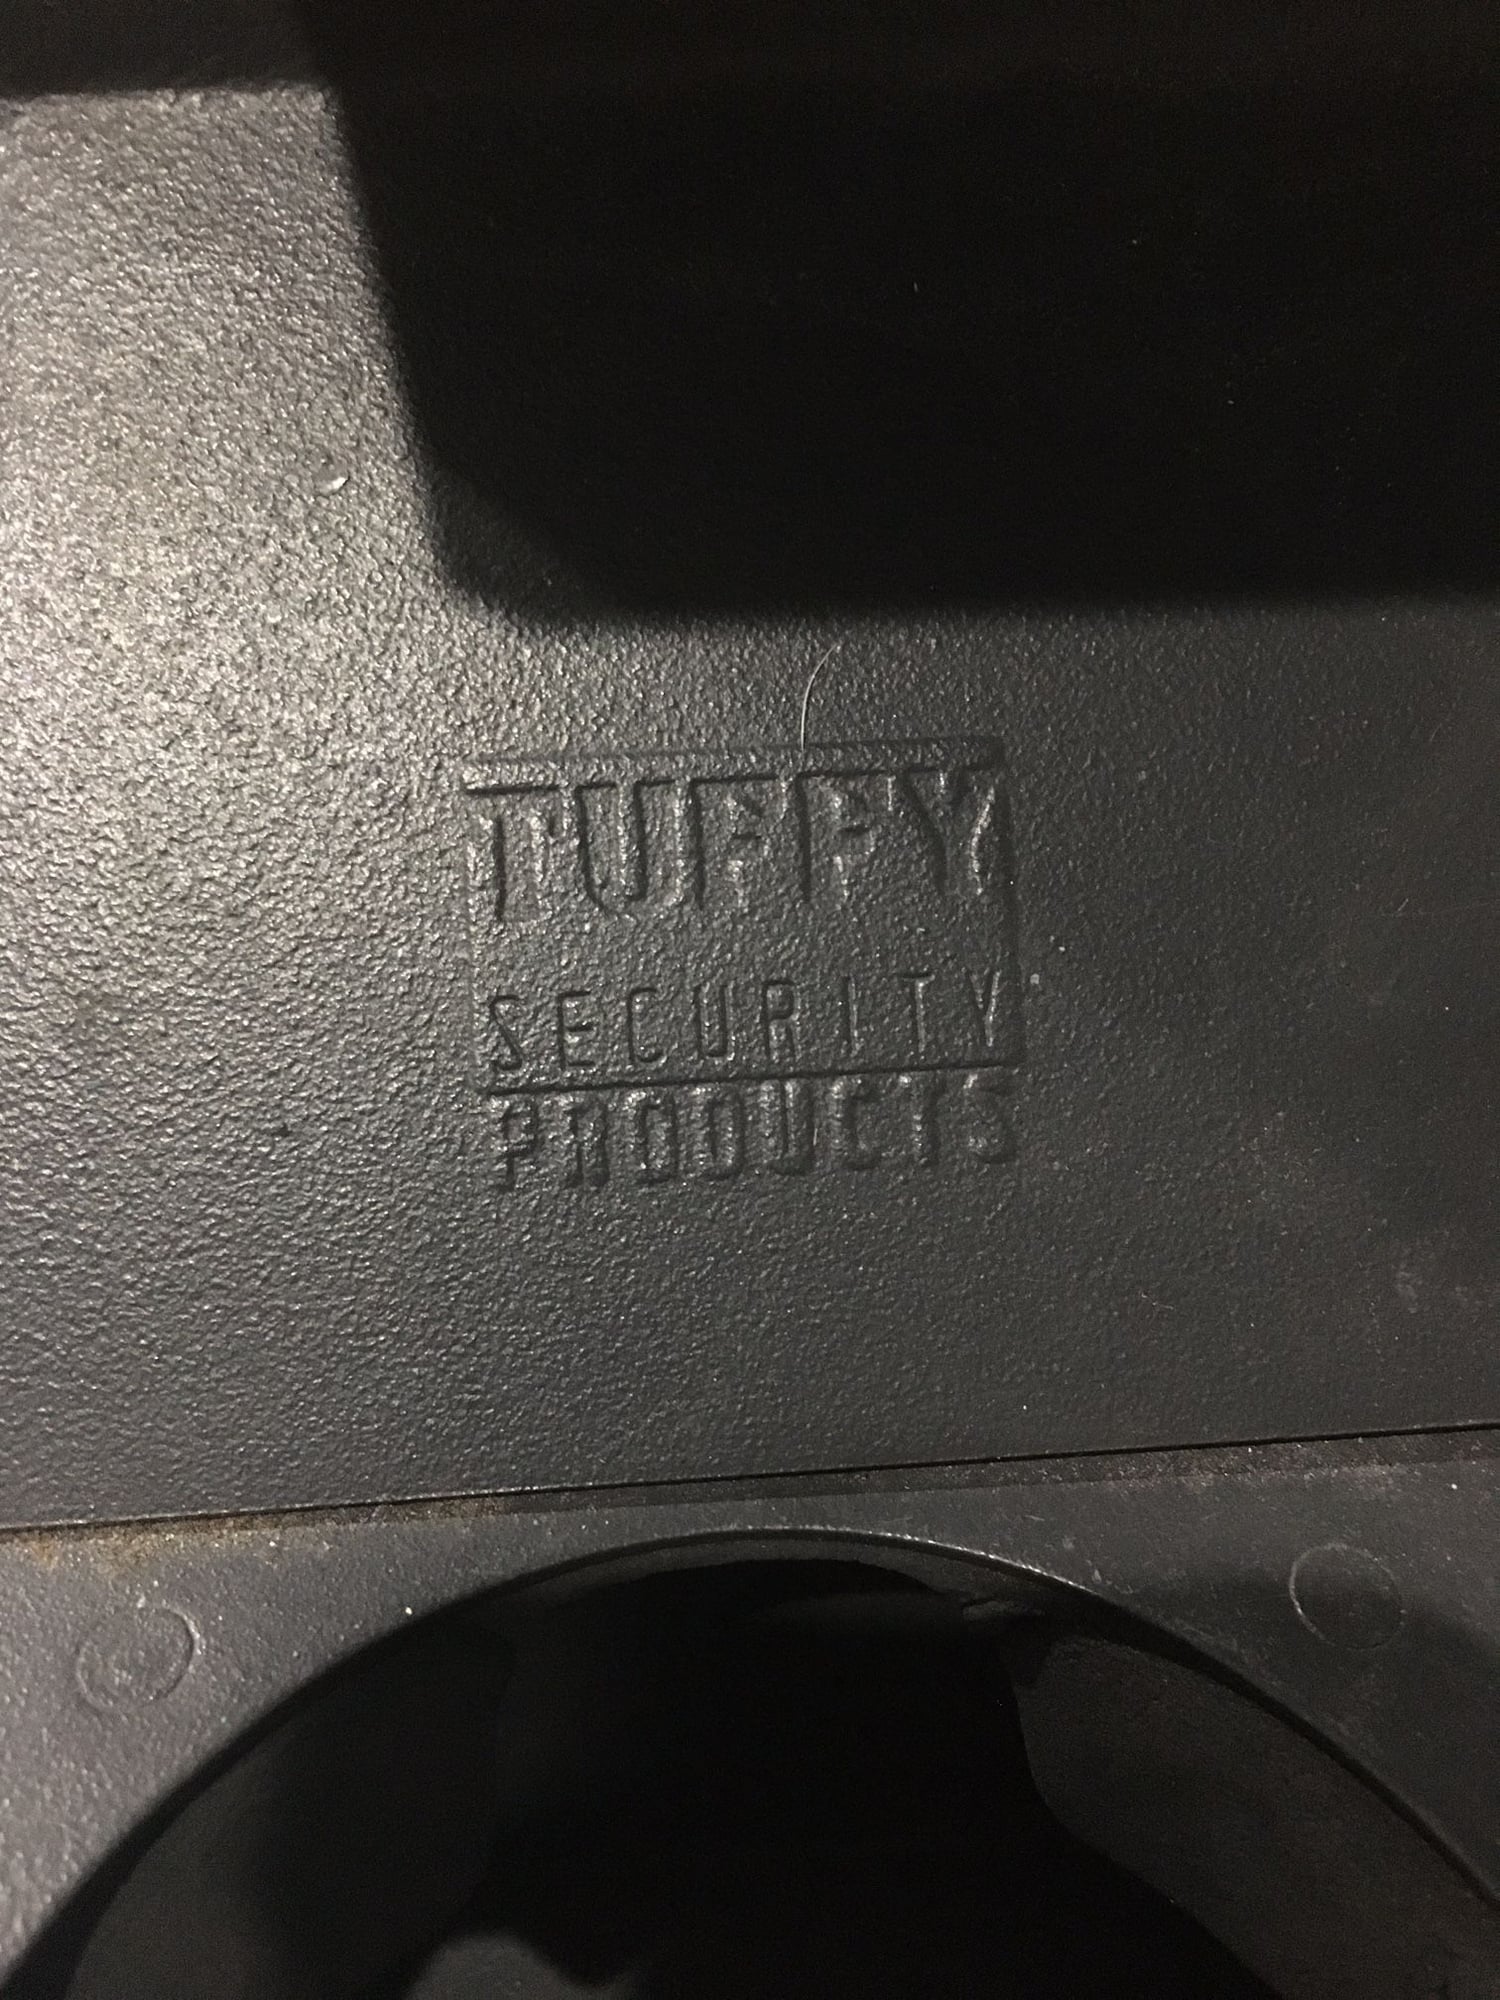 Interior/Upholstery - F/S Tuffy full security console - Used - 2007 to 2010 Jeep Wrangler - Massapequa, NY 11758, United States